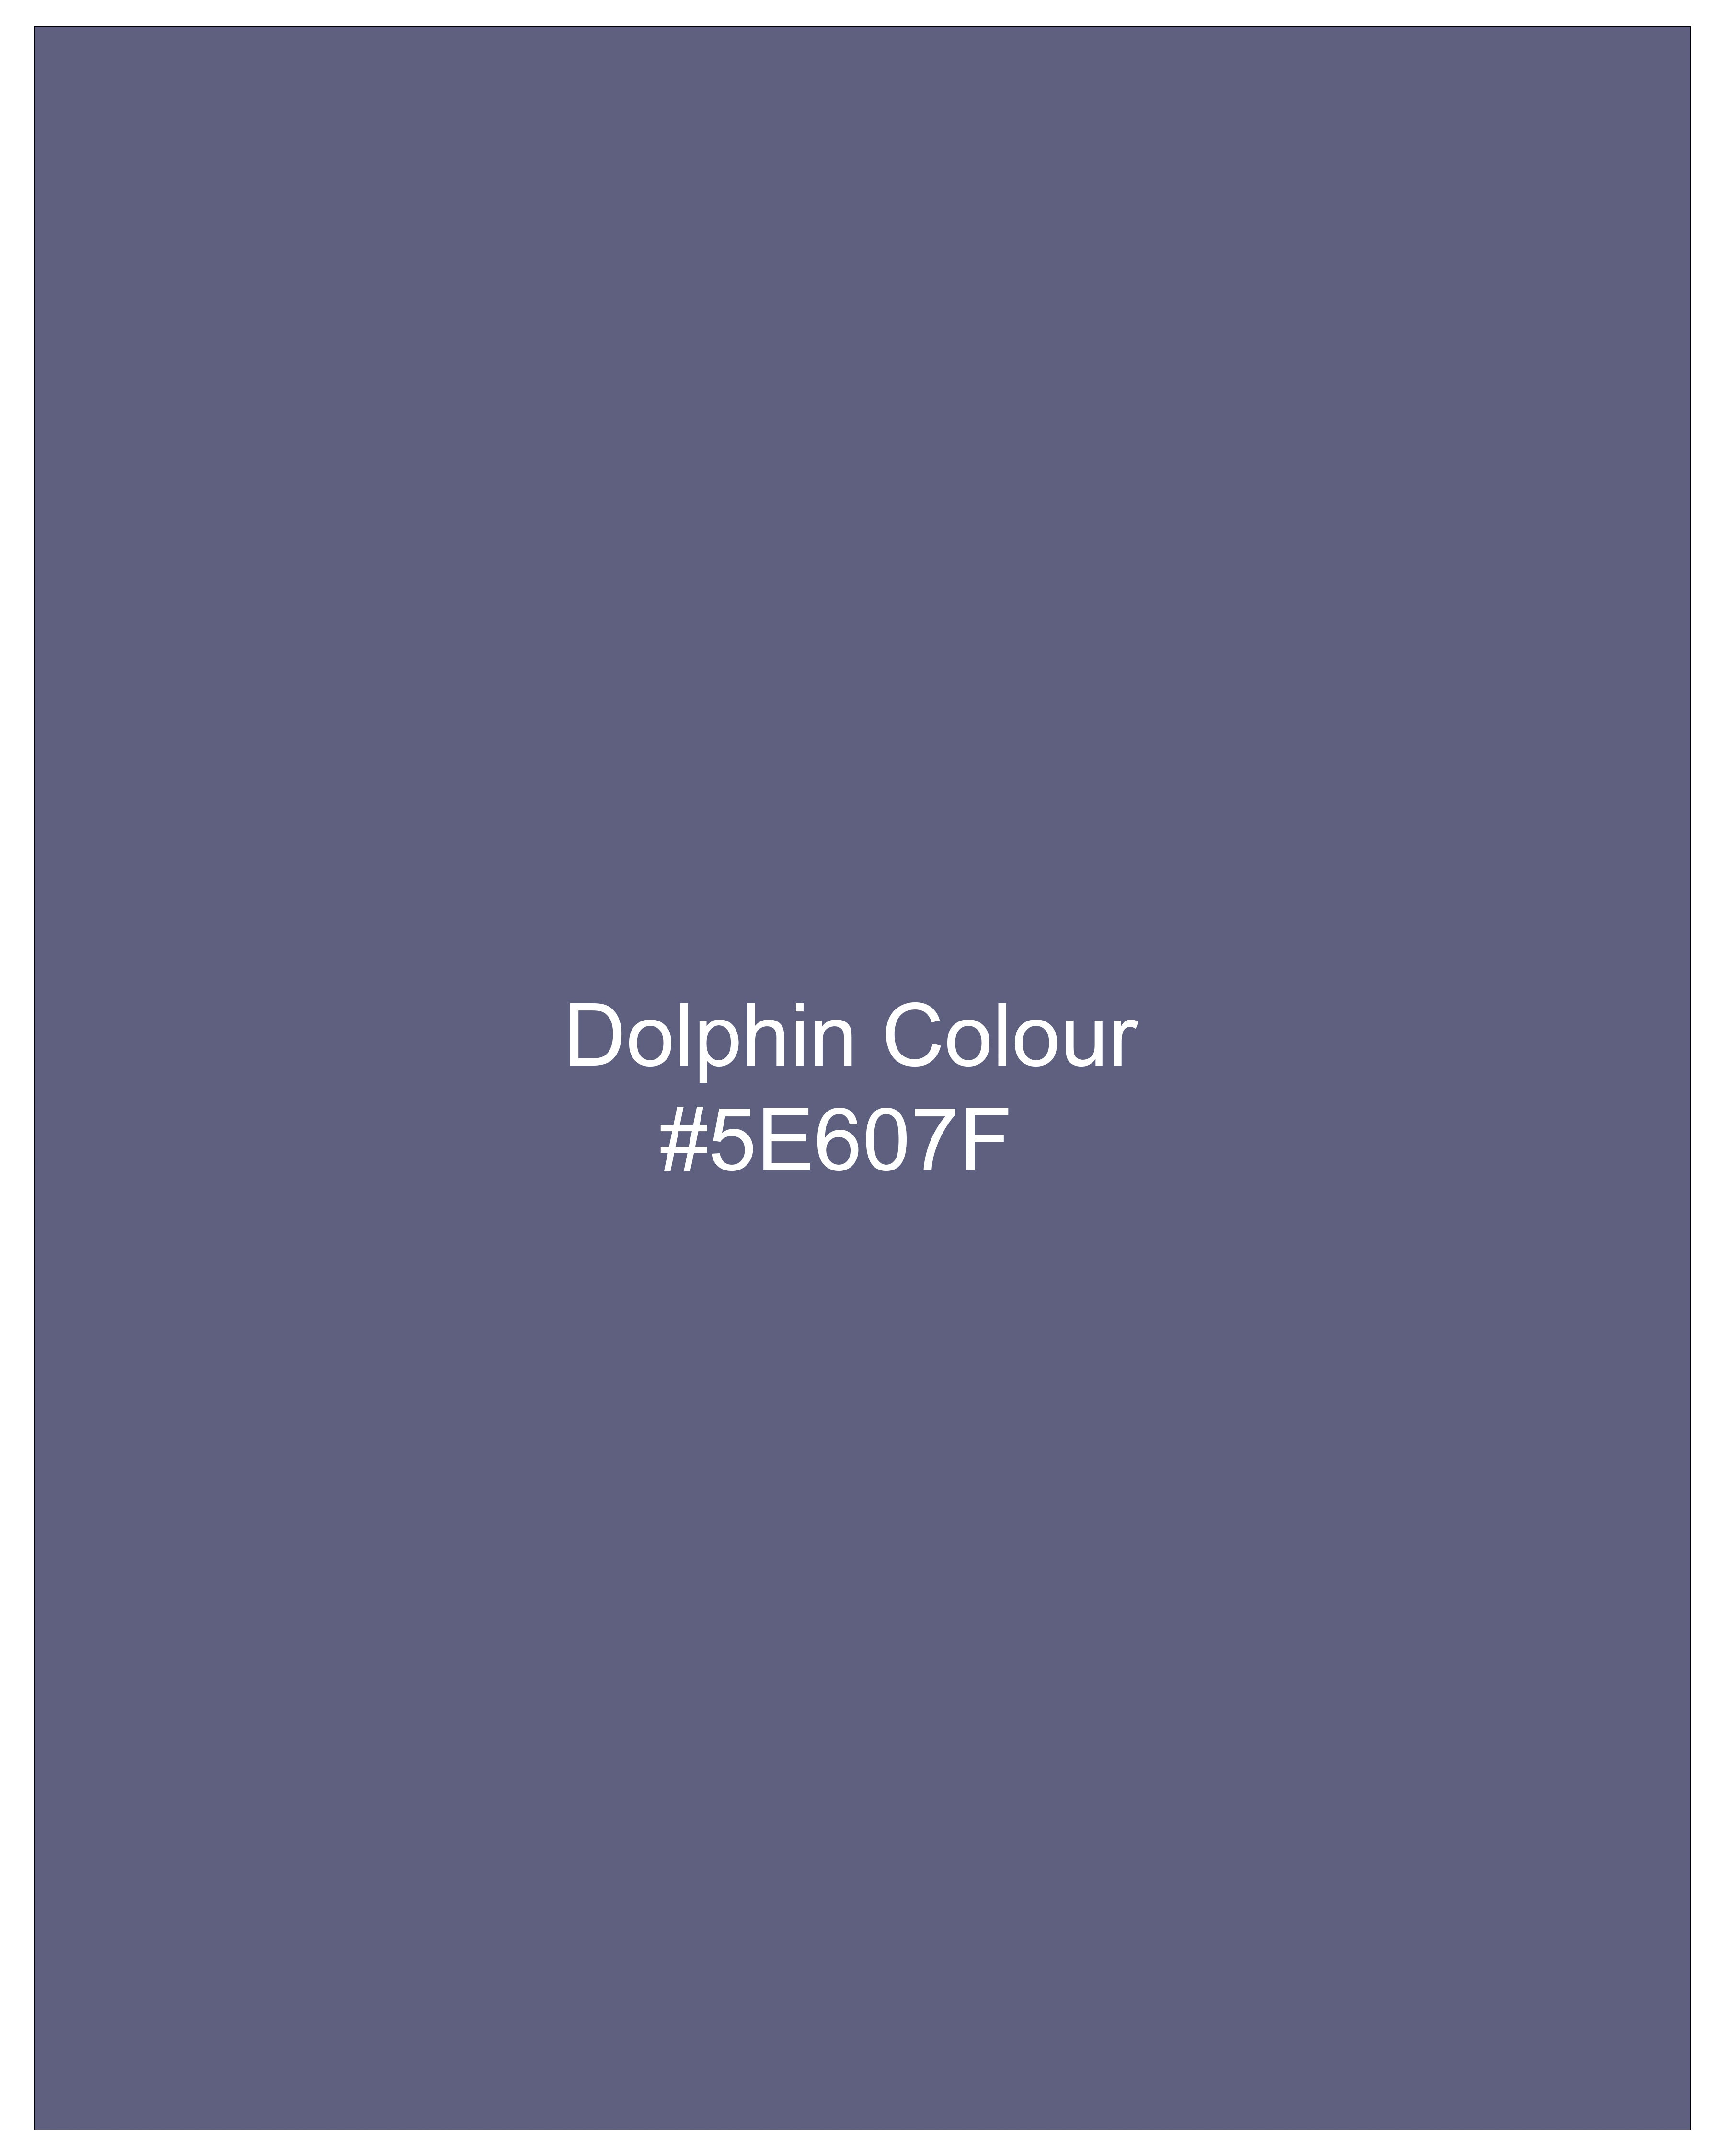 Dolphin Blue Textured Single Breasted Designer Blazer BL2613-SB-D19-36, BL2613-SB-D19-38, BL2613-SB-D19-40, BL2613-SB-D19-42, BL2613-SB-D19-44, BL2613-SB-D19-46, BL2613-SB-D19-48, BL2613-SB-D19-50, BL2613-SB-D19-52, BL2613-SB-D19-54, BL2613-SB-D19-56, BL2613-SB-D19-58, BL2613-SB-D19-60